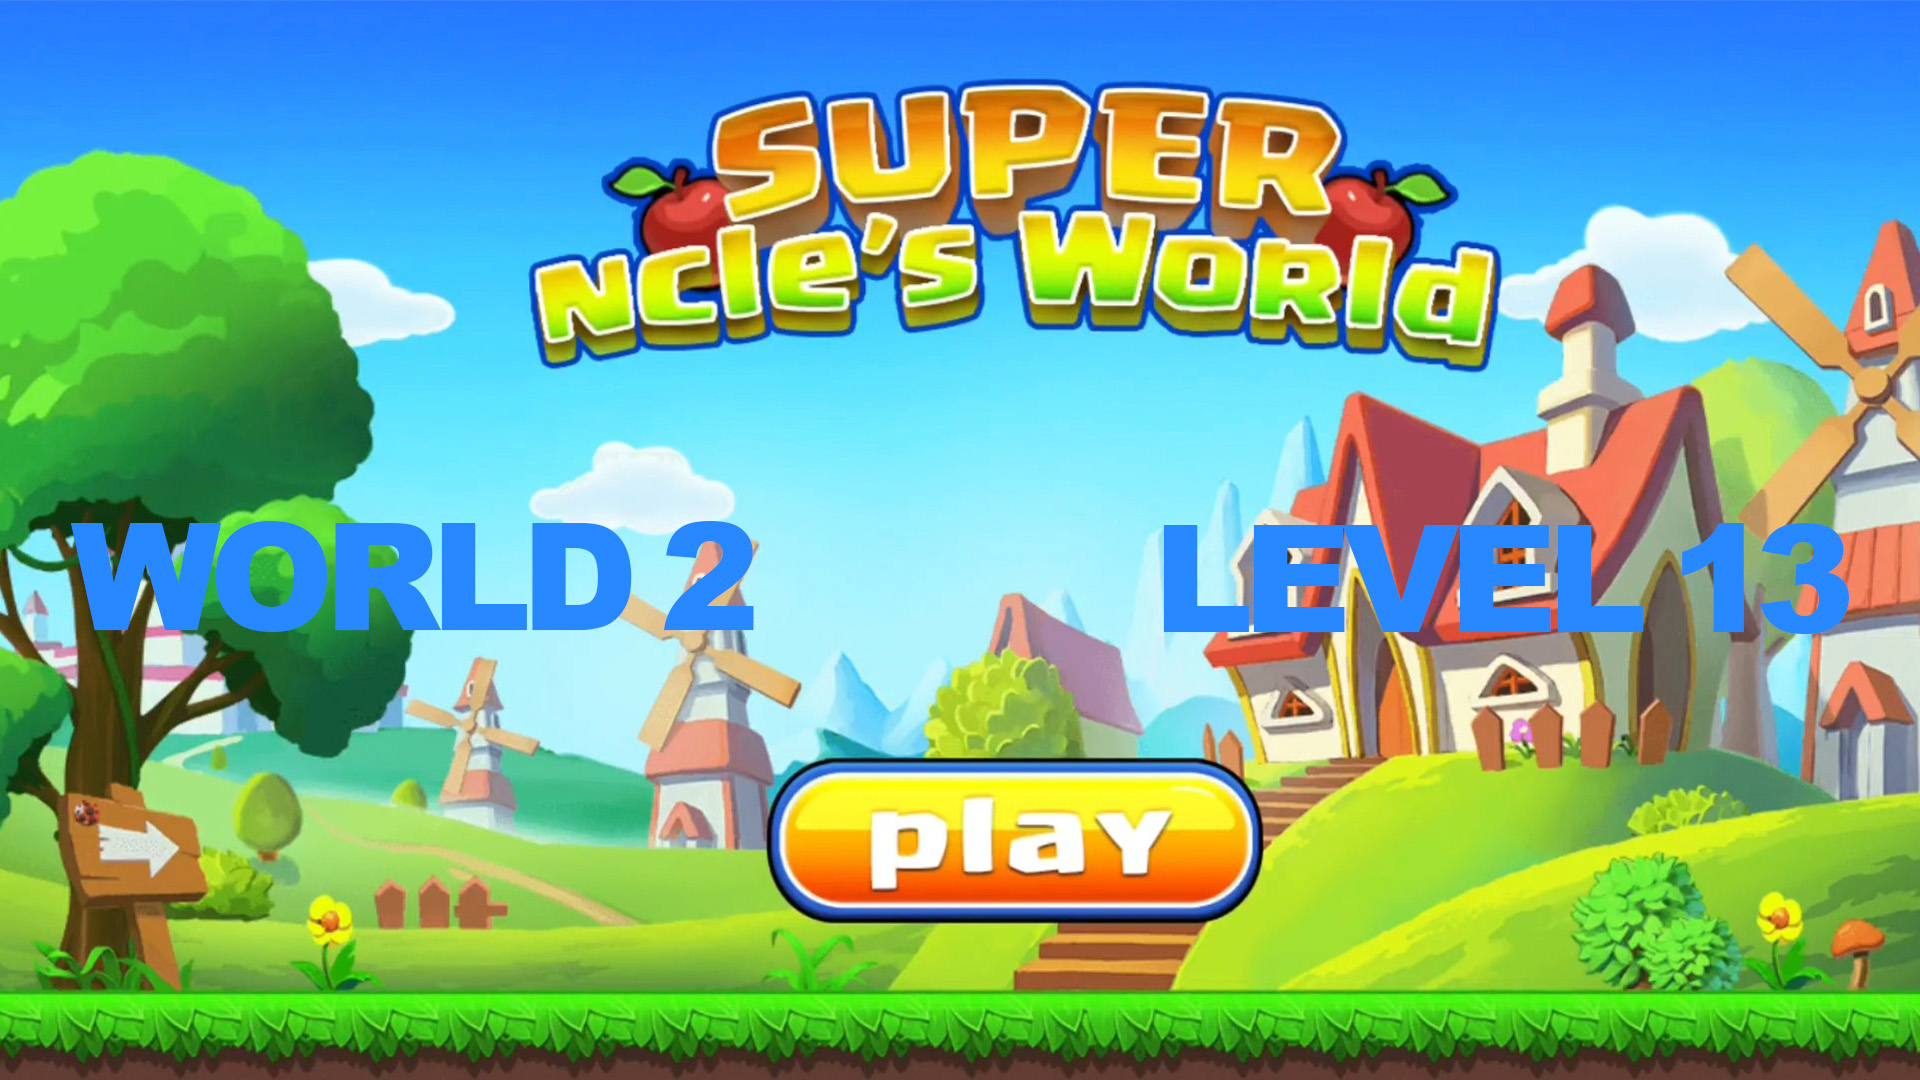 Super ncle's  World 2. level 13.